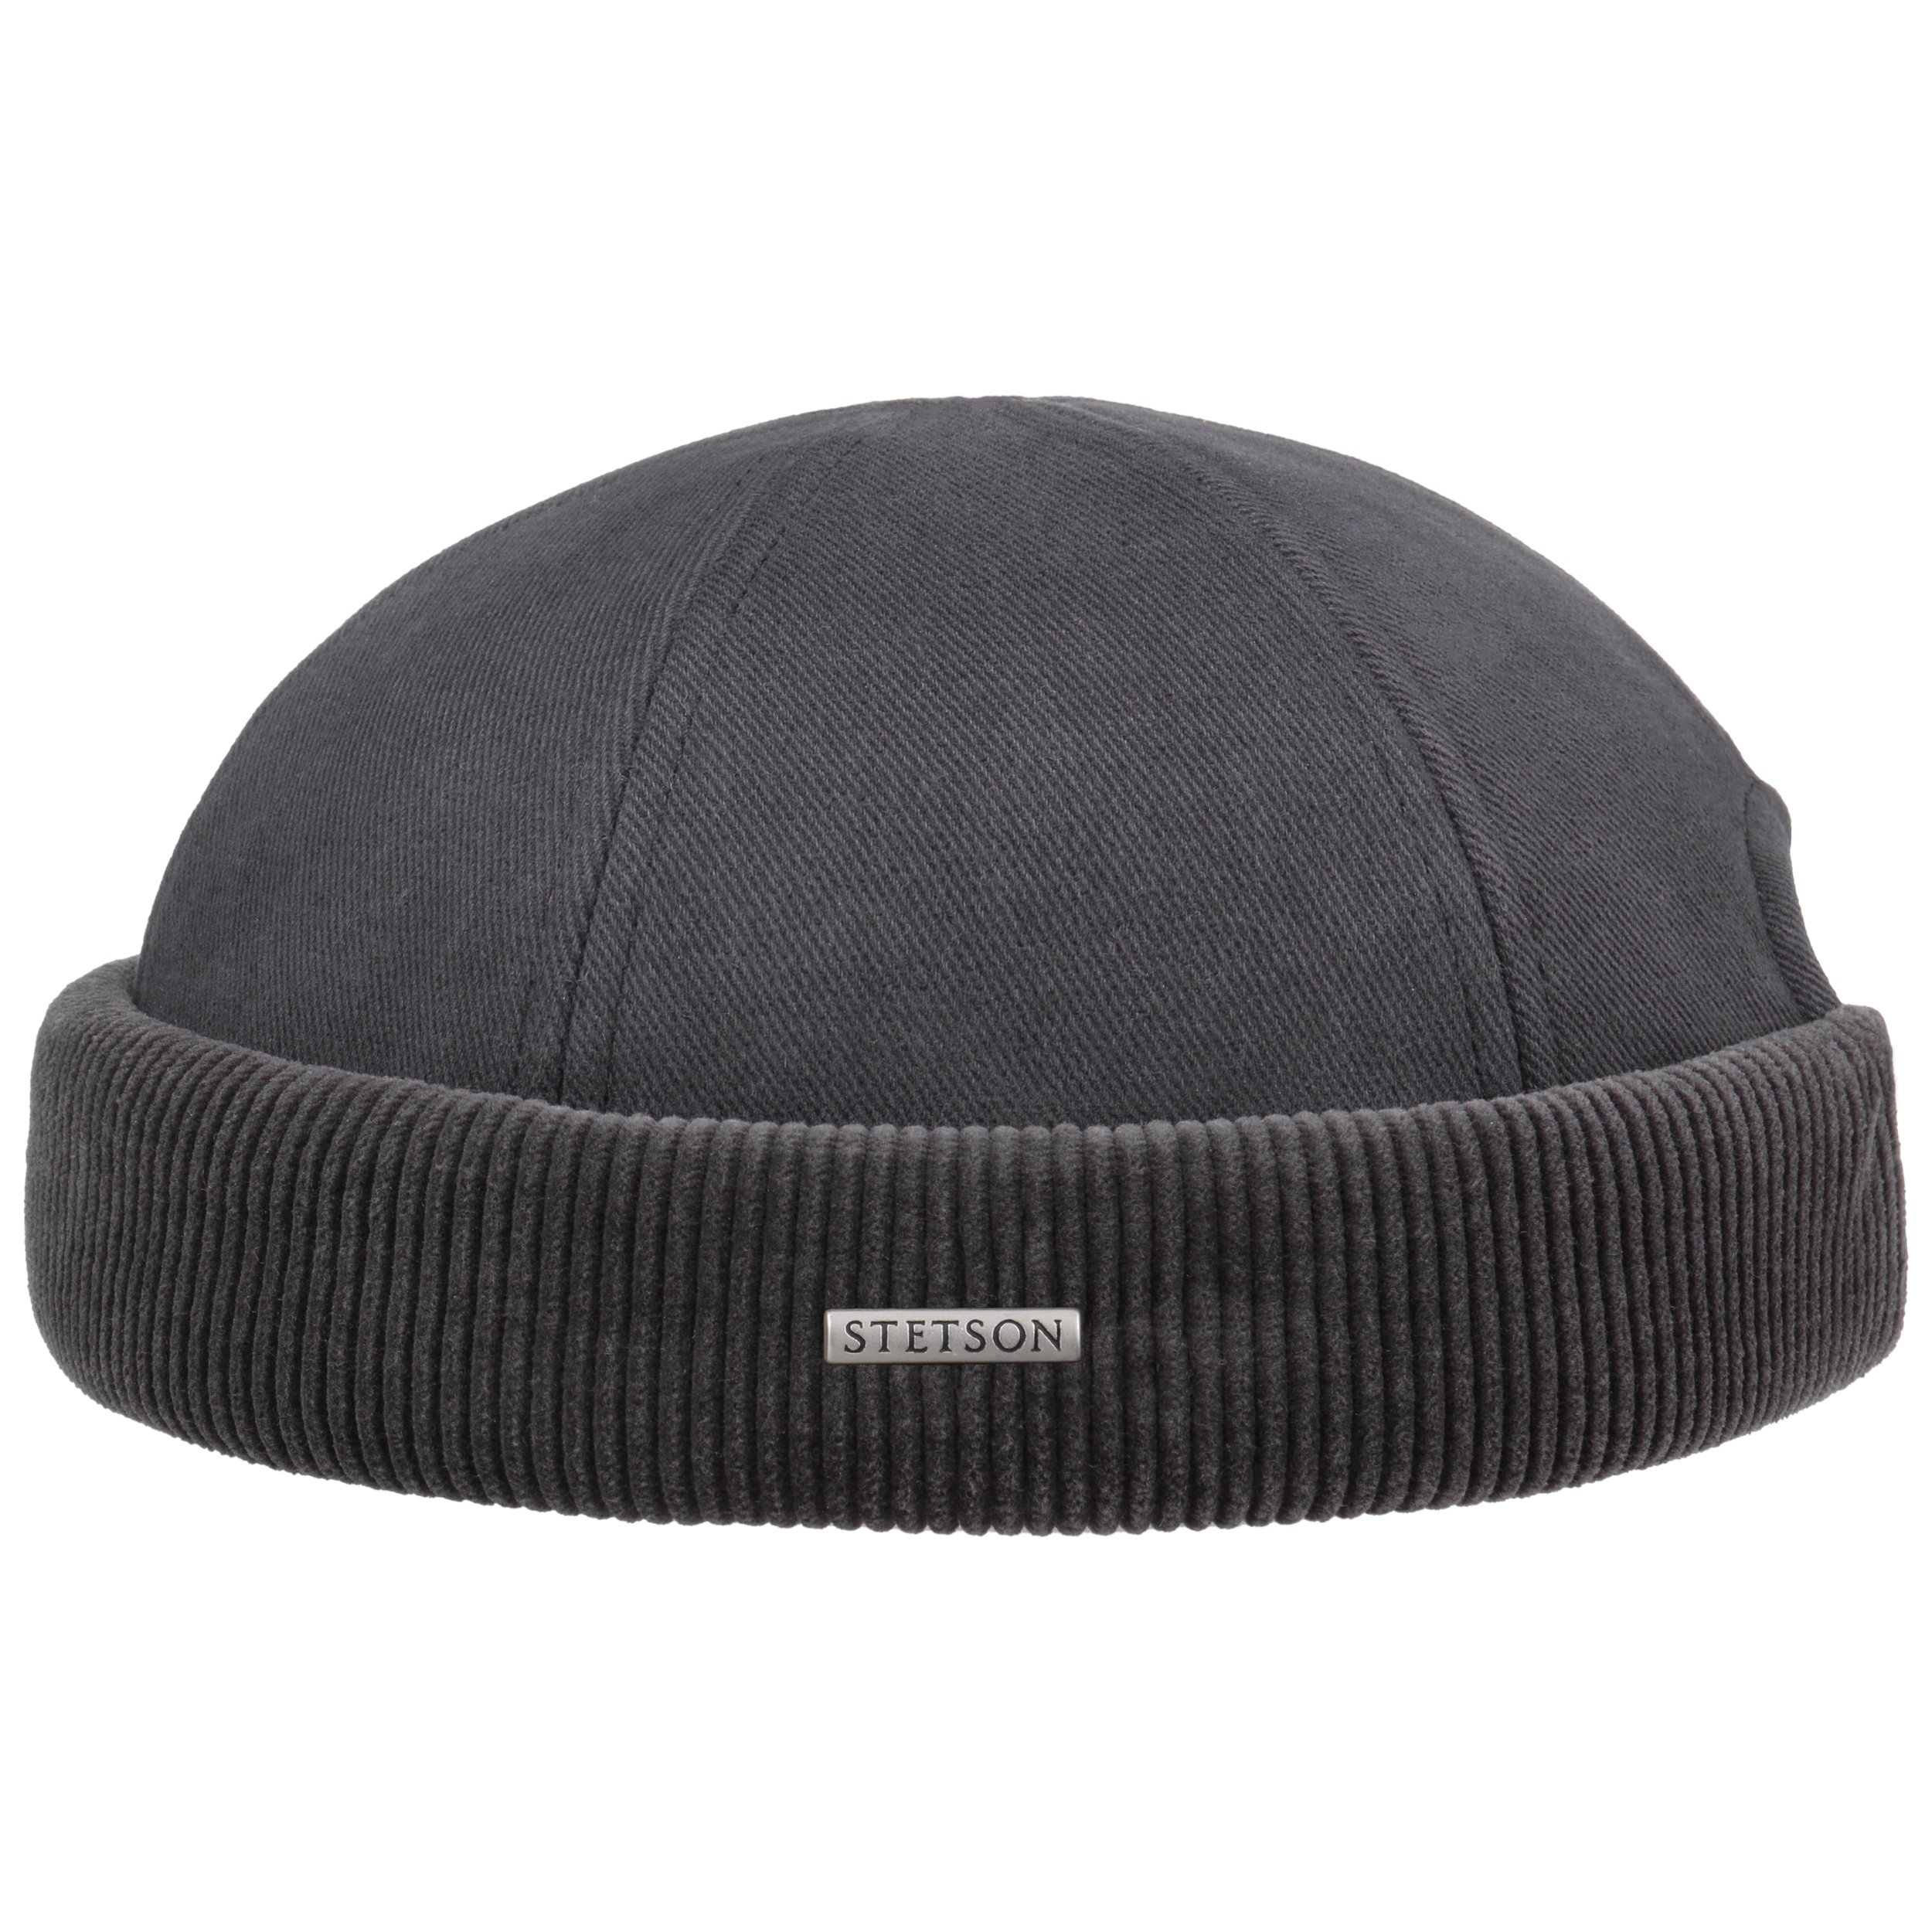 Kensington Soft Cotton Docker - by 69,00 Stetson € Hat